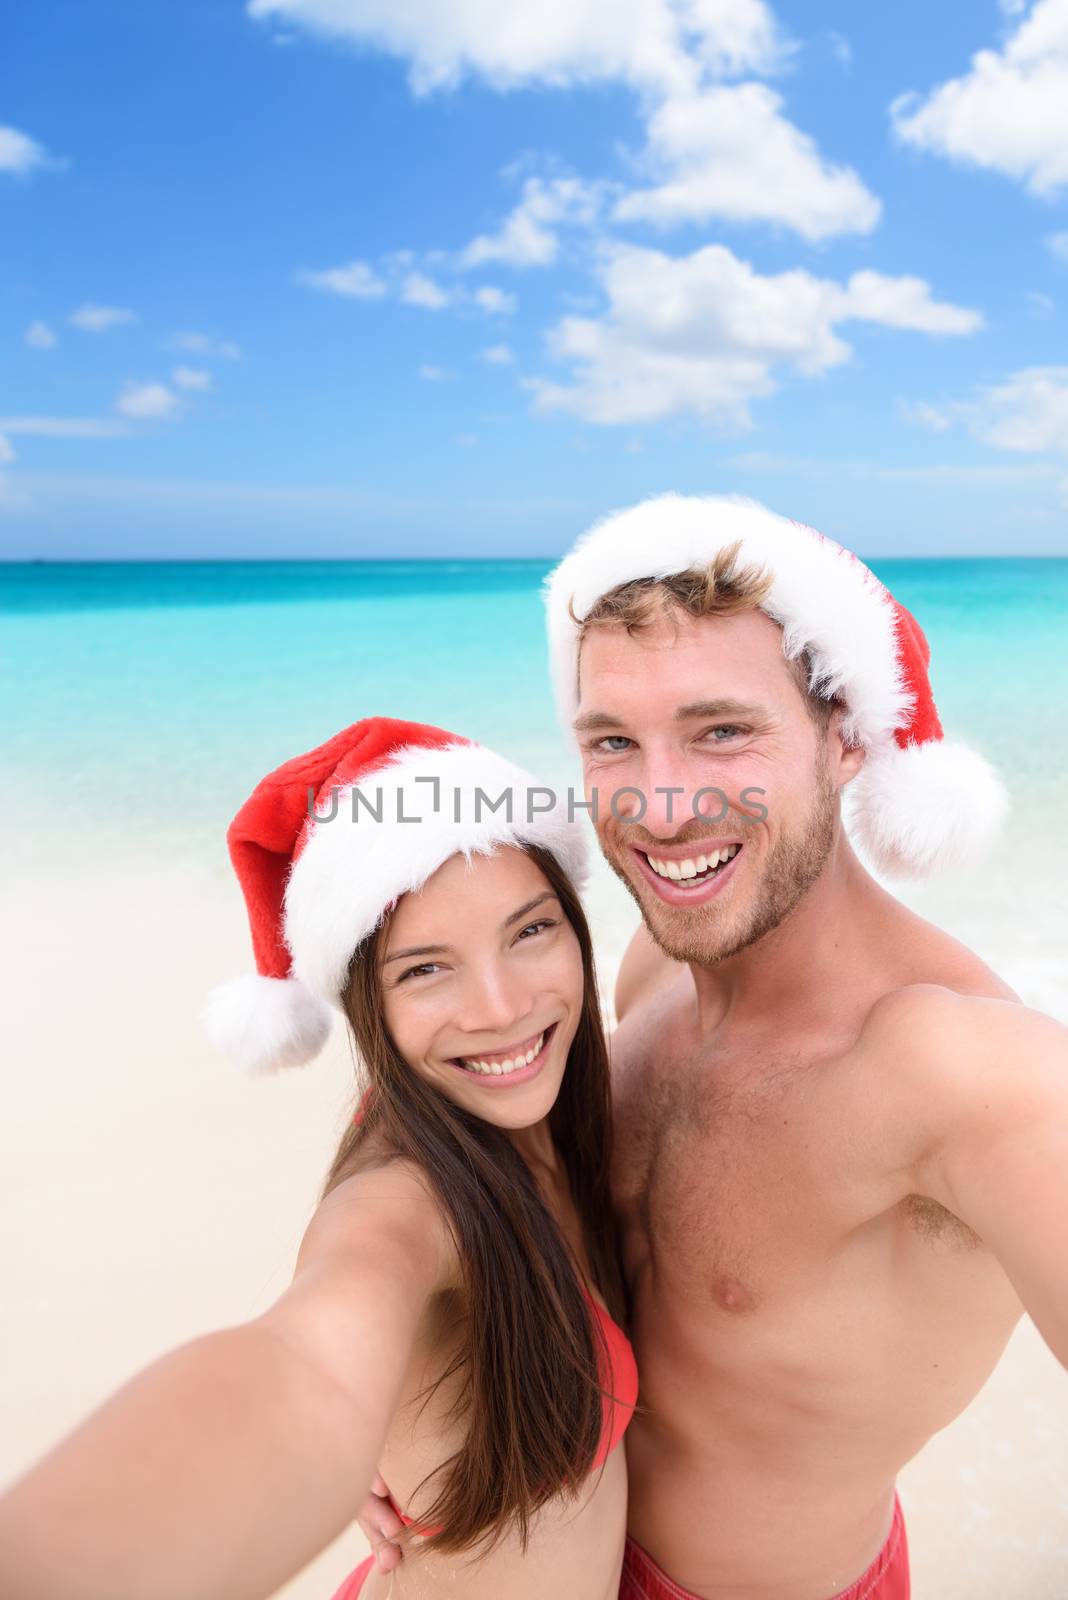 Christmas couple taking selfie on beach holidays by Maridav